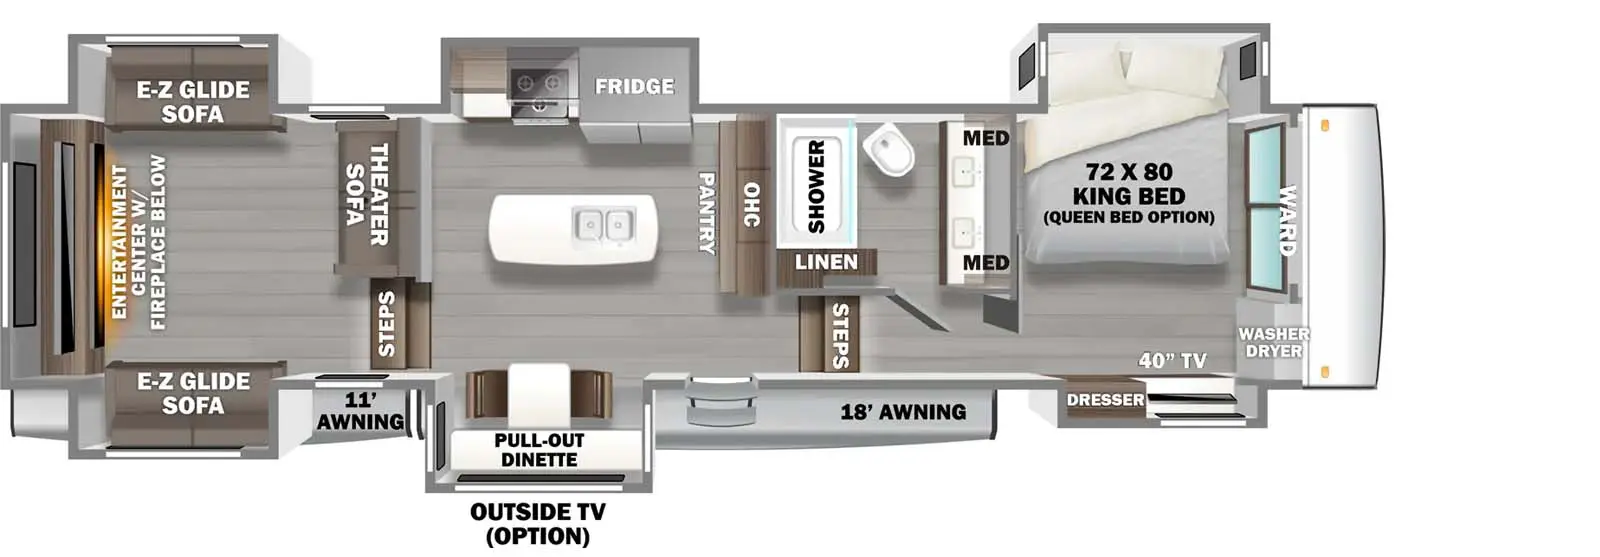 419RD Floorplan Image